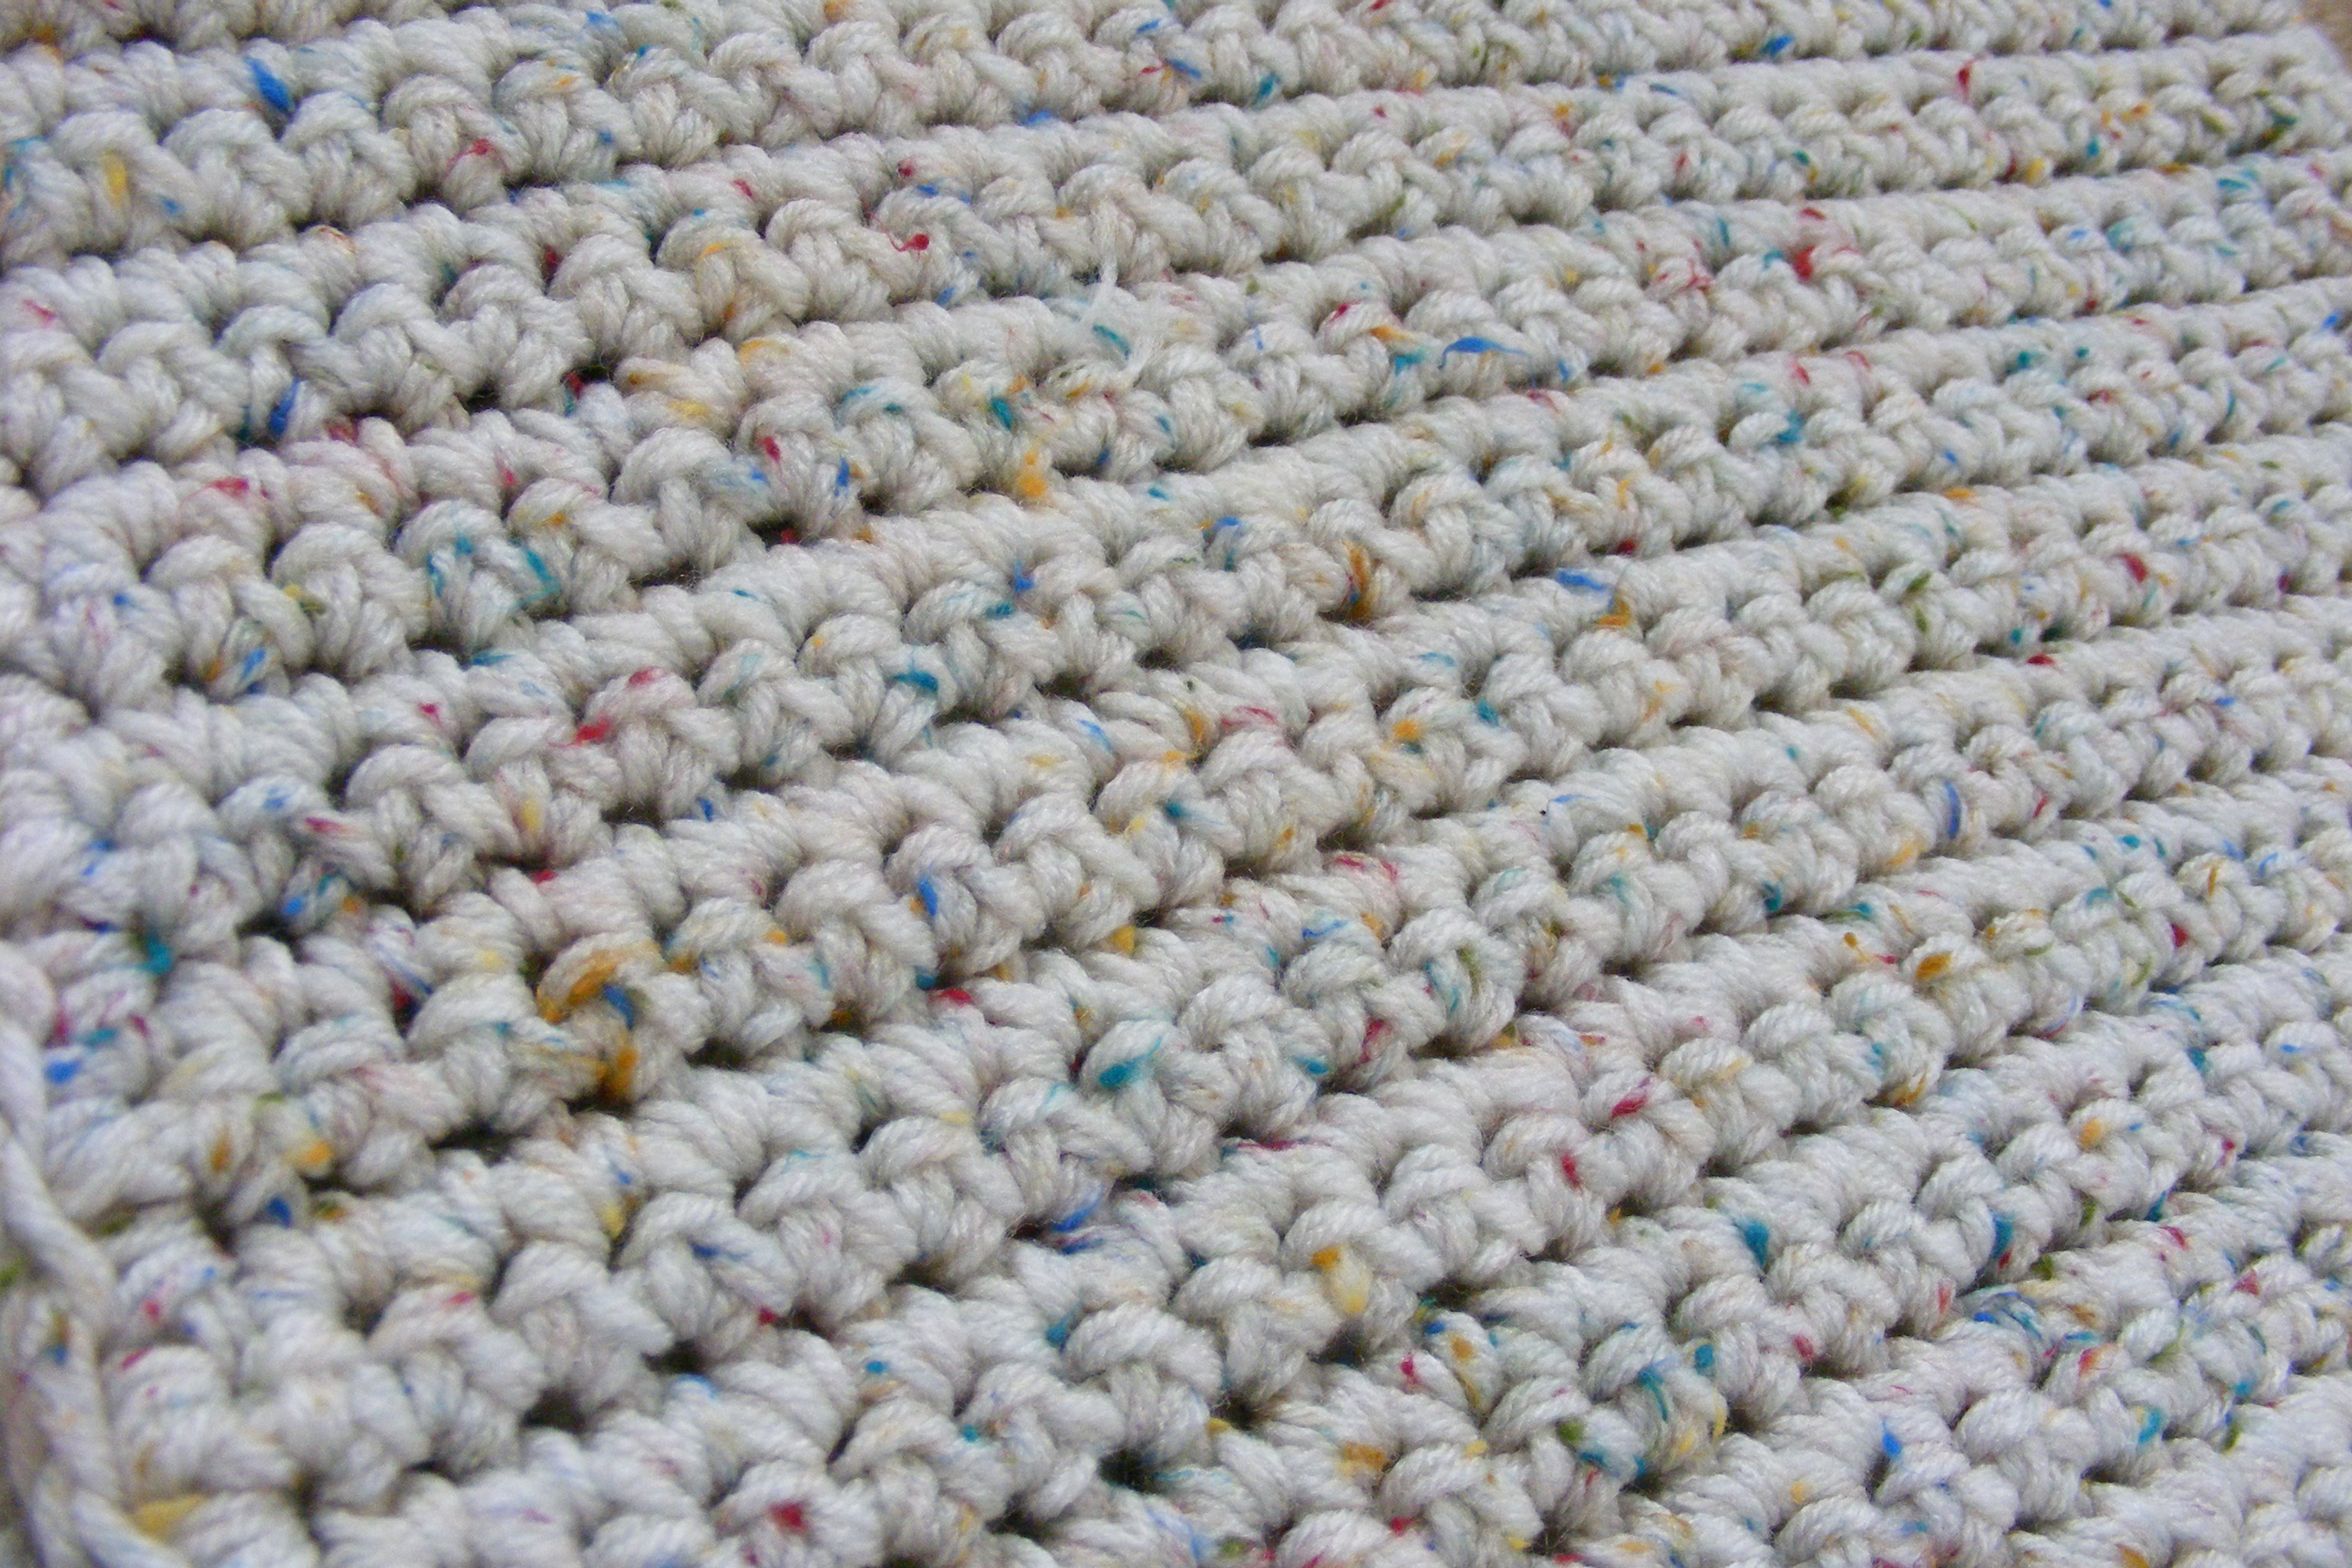 Begginer Crochet Projects Baby Blankets Single Crochet Ba Blanket Gretchkals Yarny Adventures